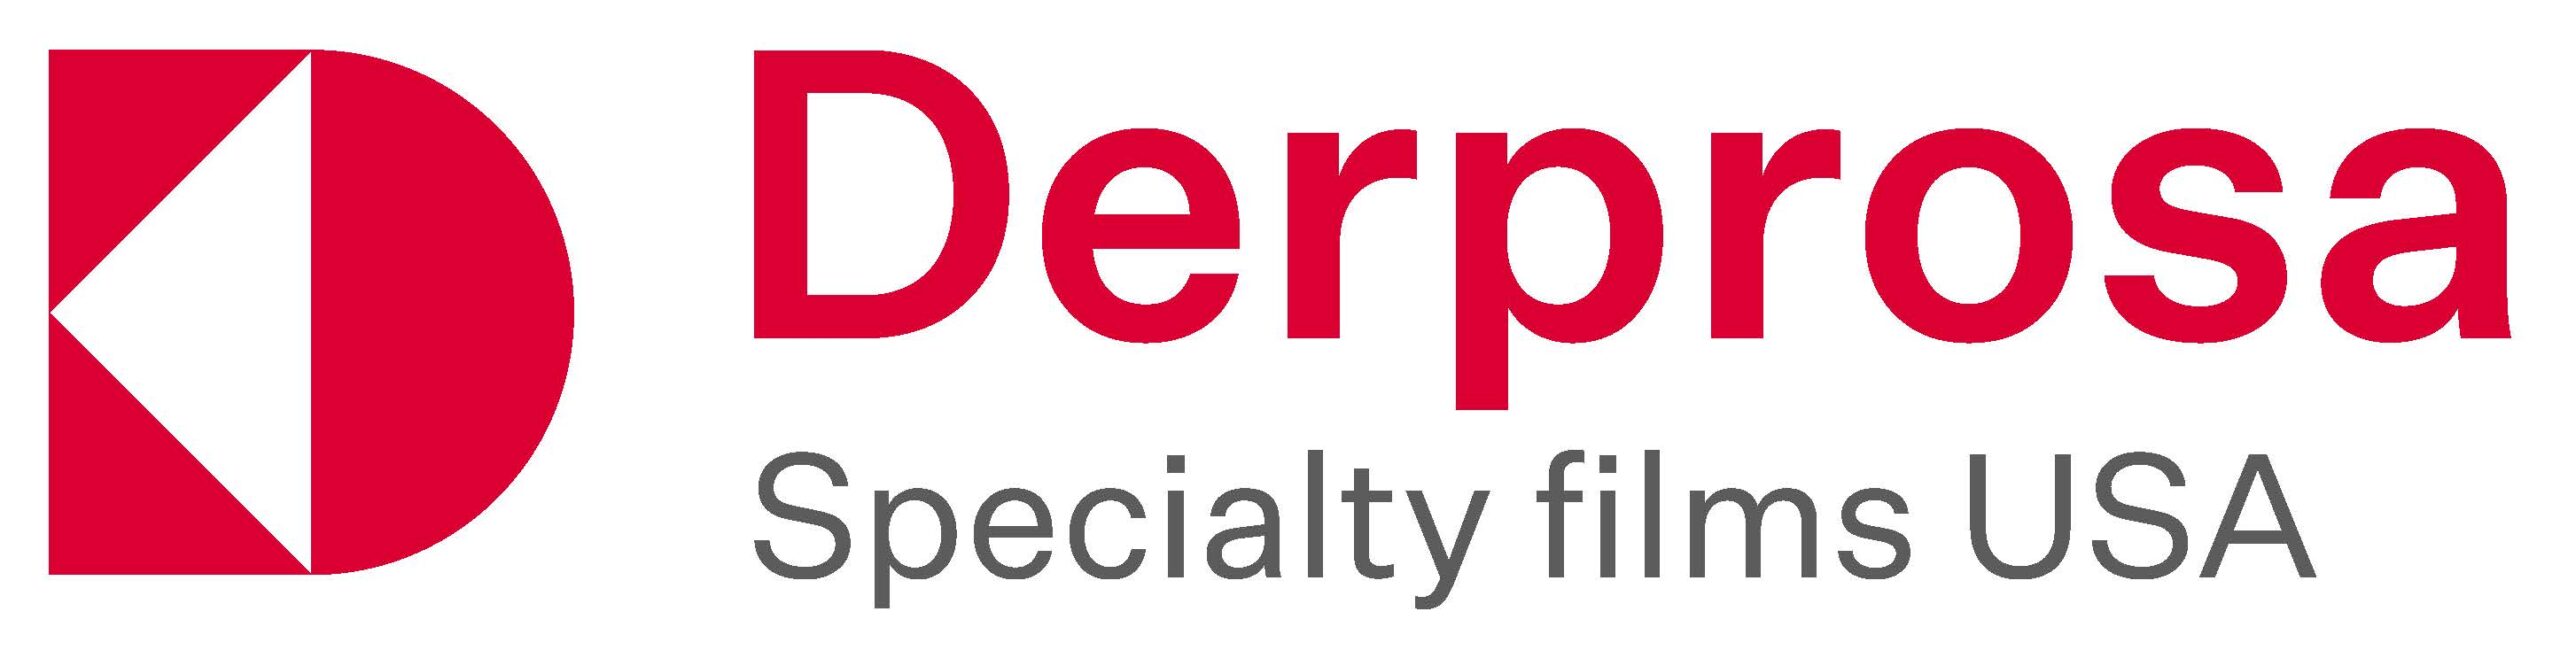 PDF Derprosa Logo in Red and Black